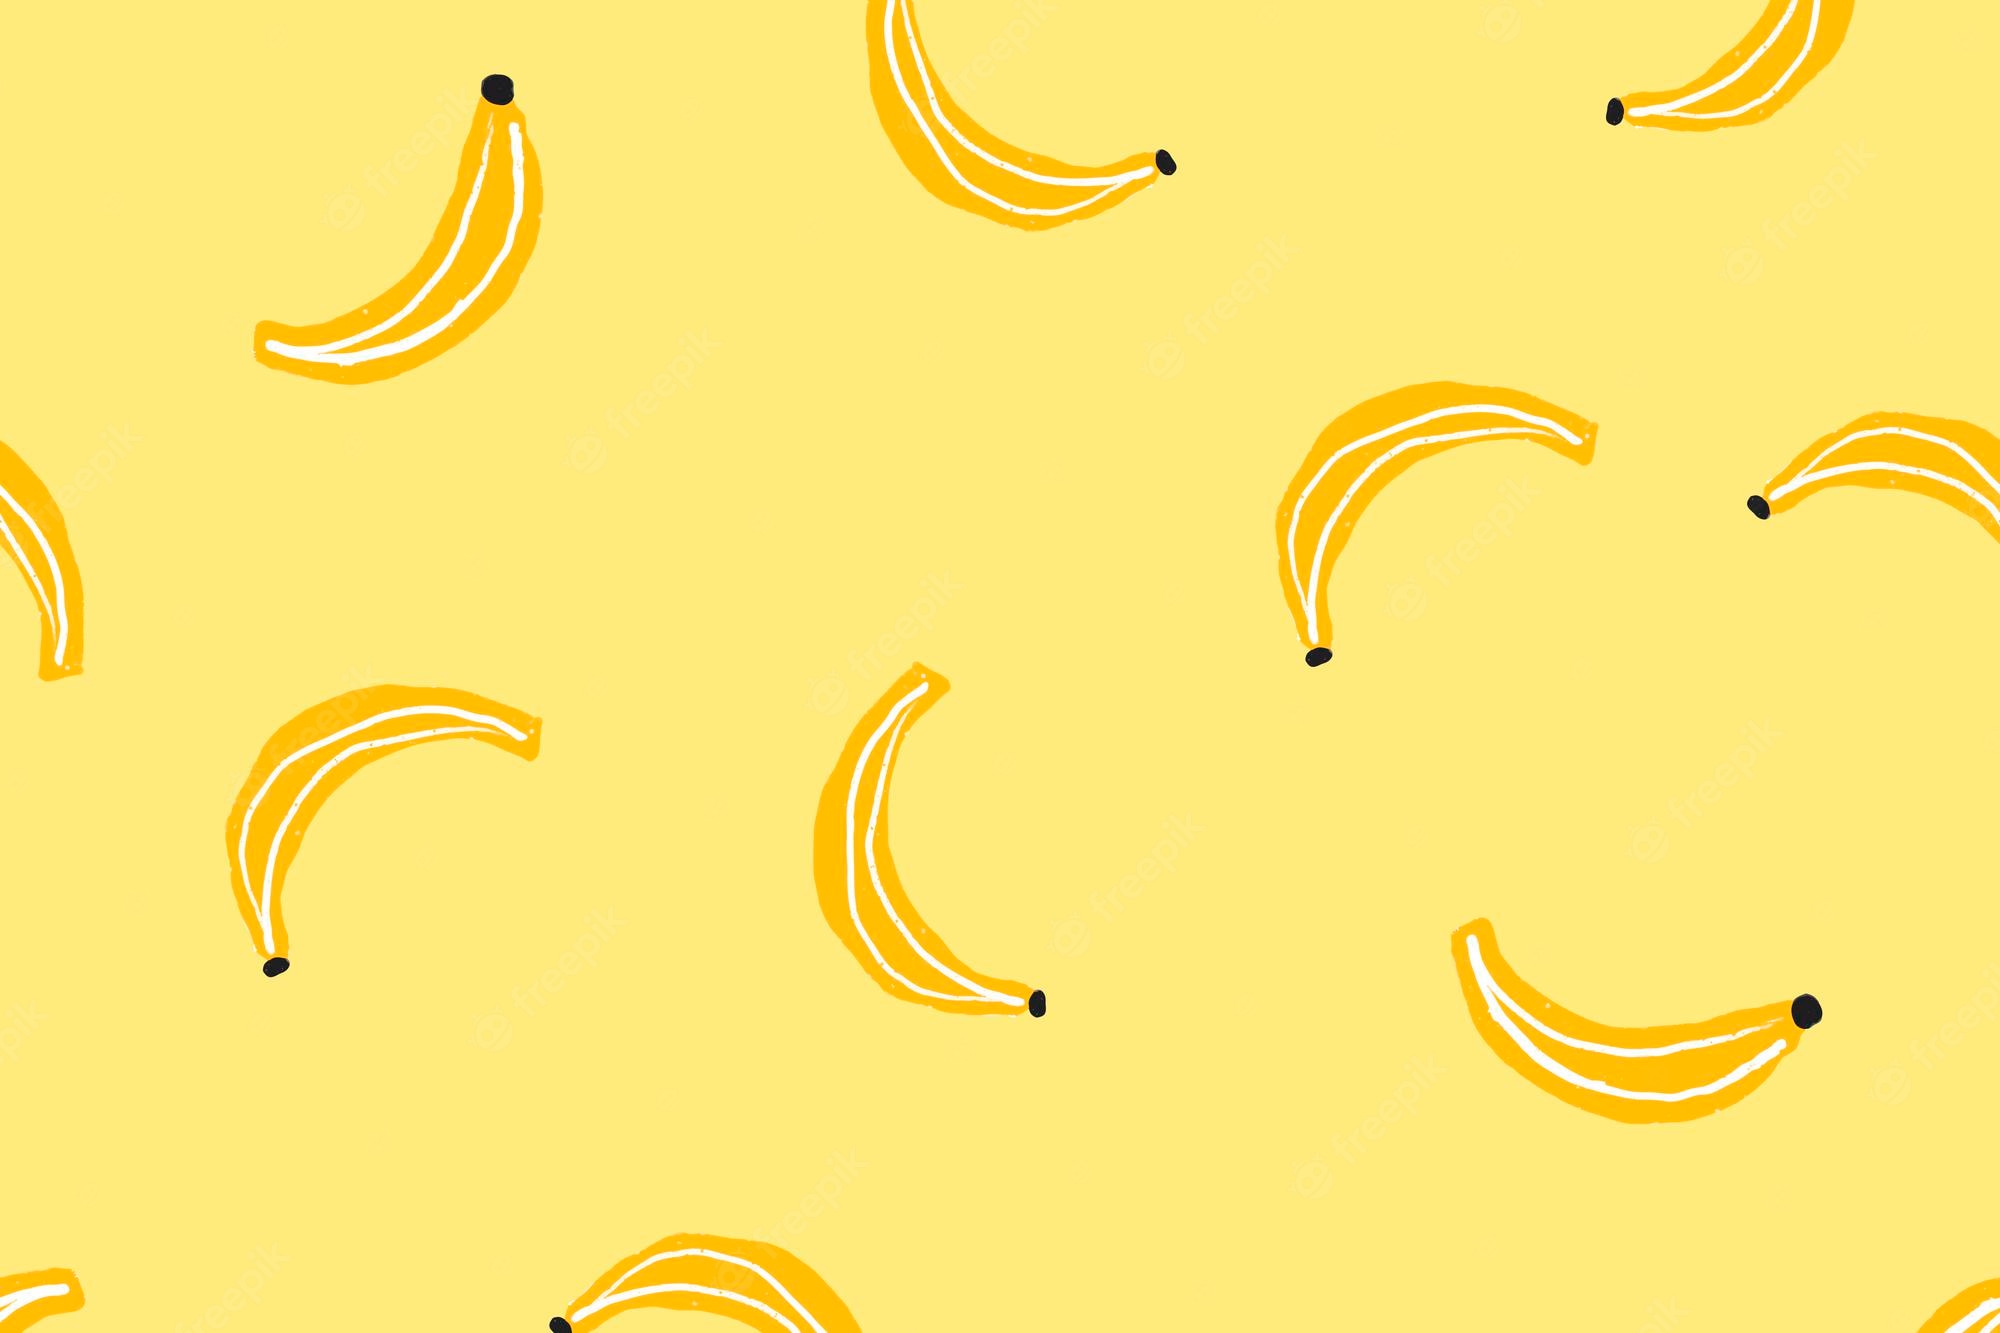 Banana Vectors & Illustrations for Free Download